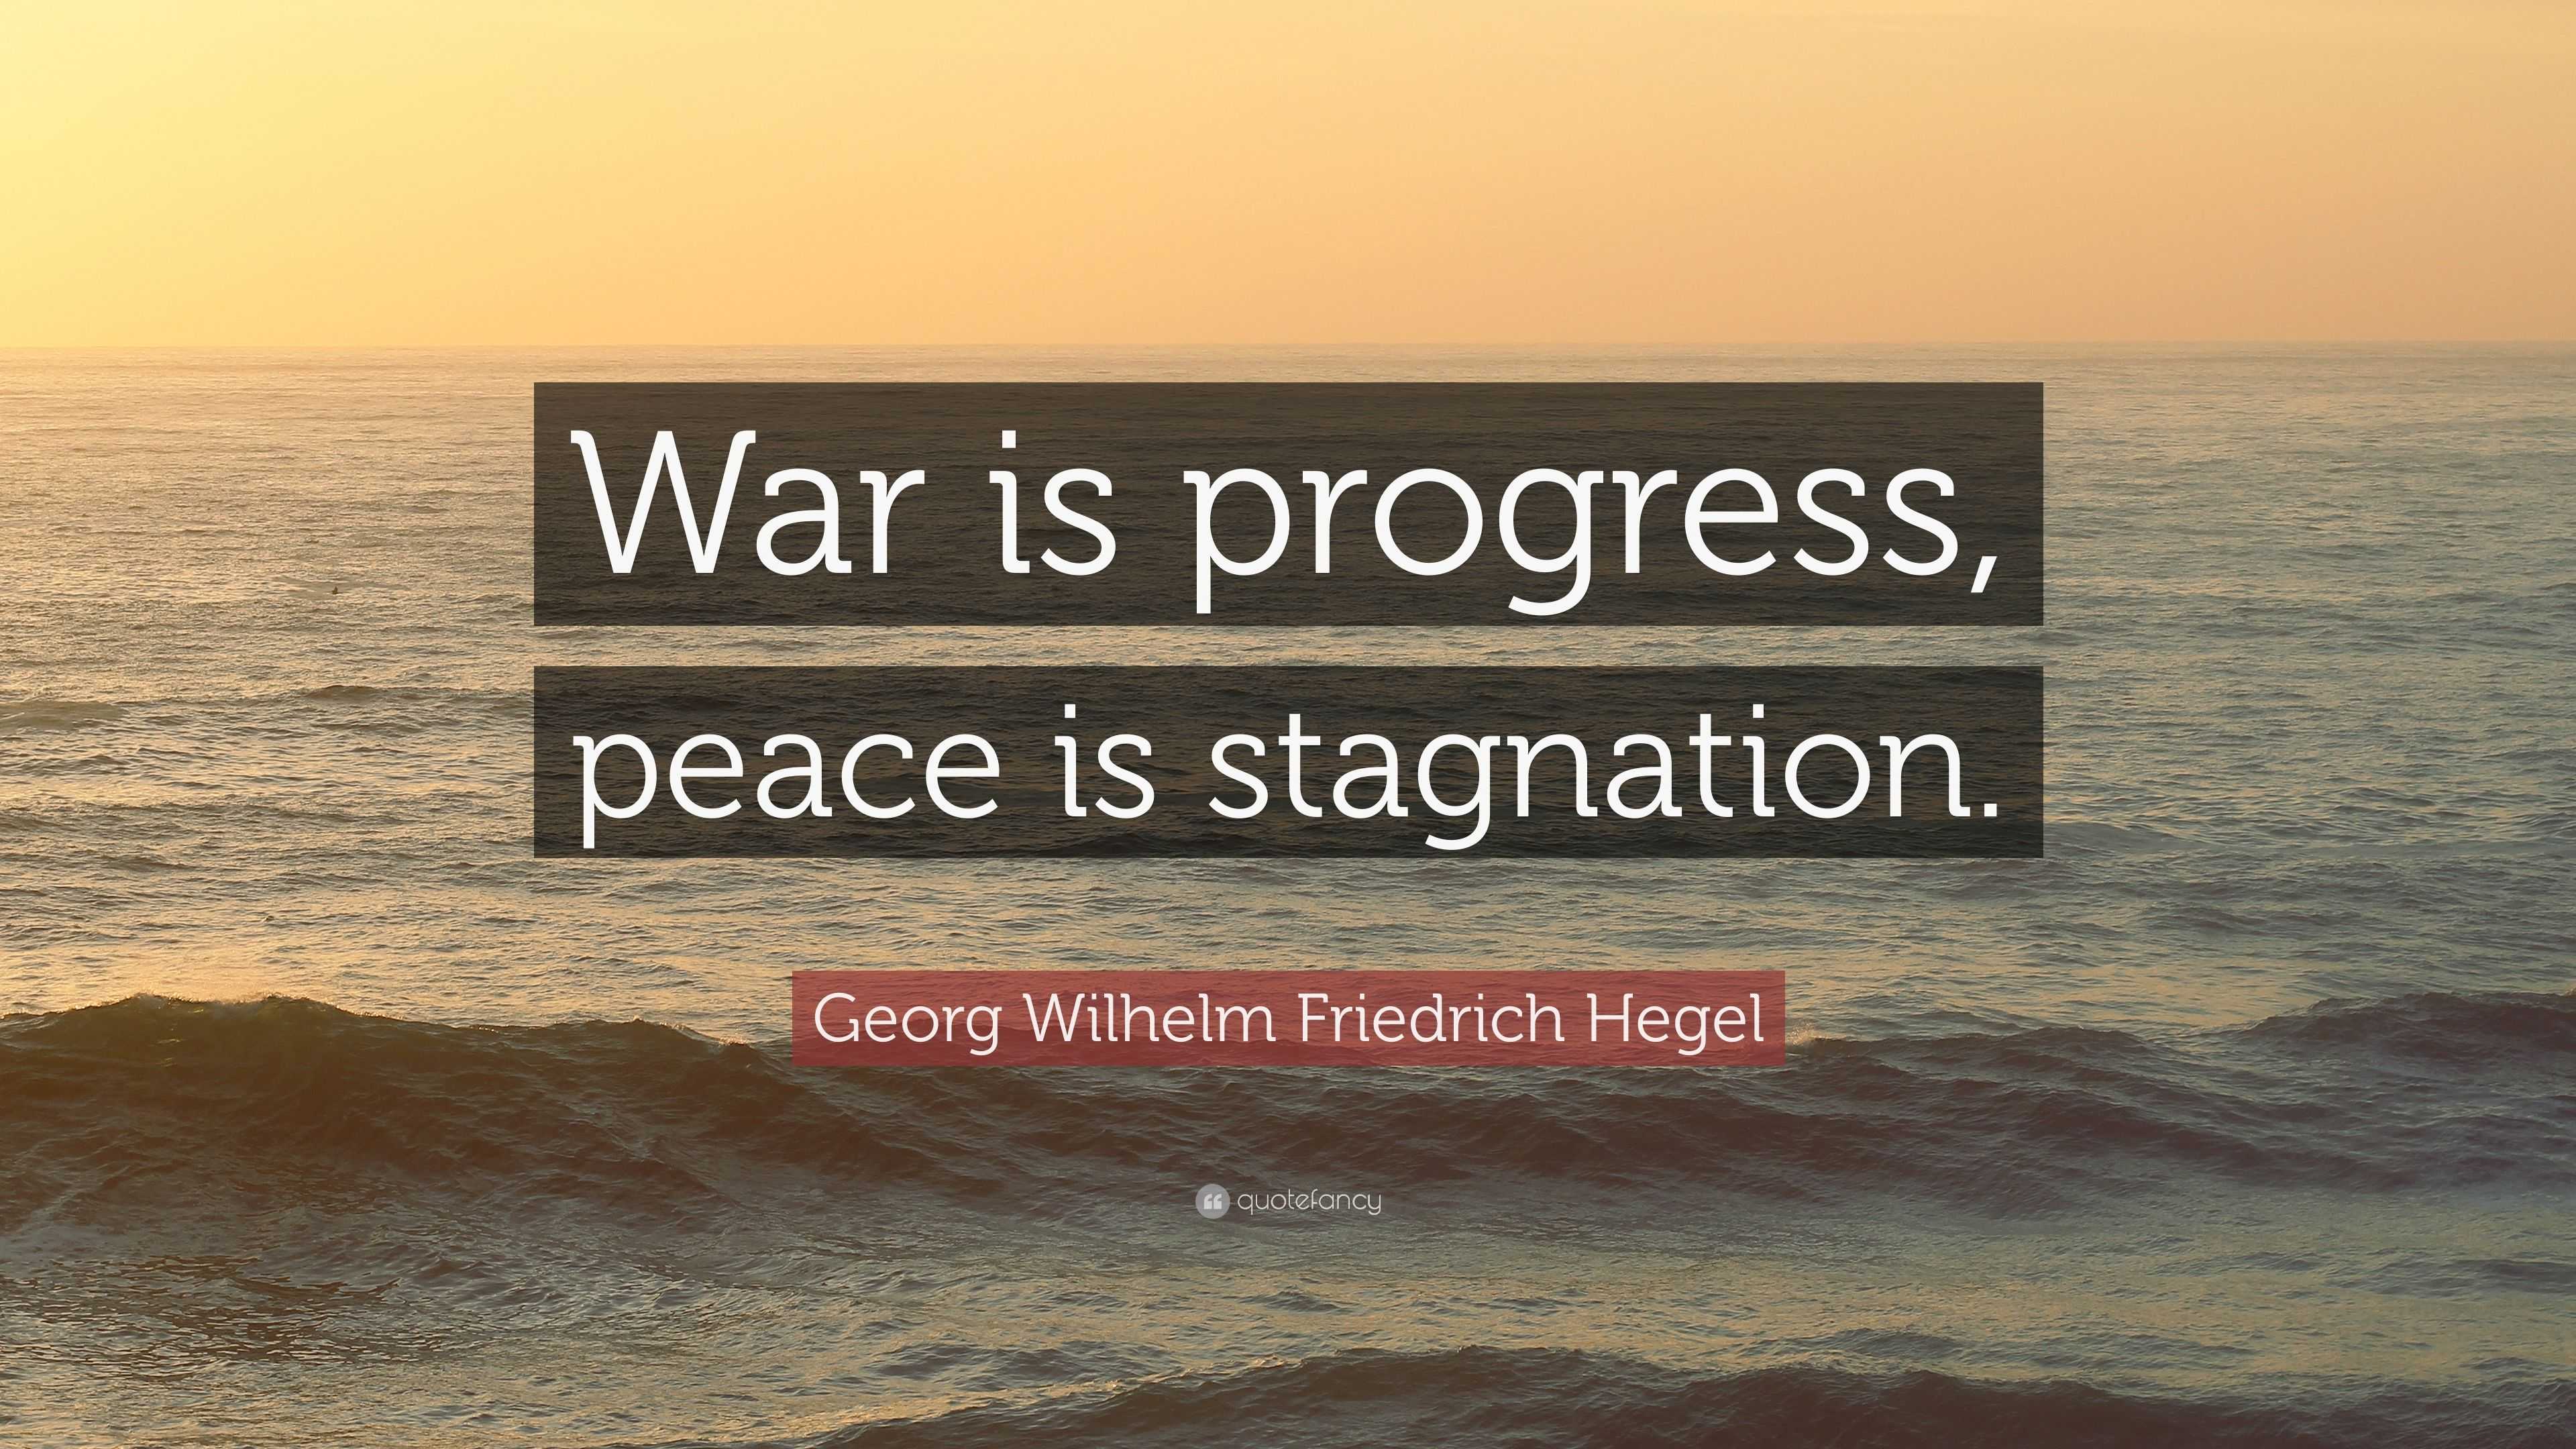 essay on war is progress peace is stagnation